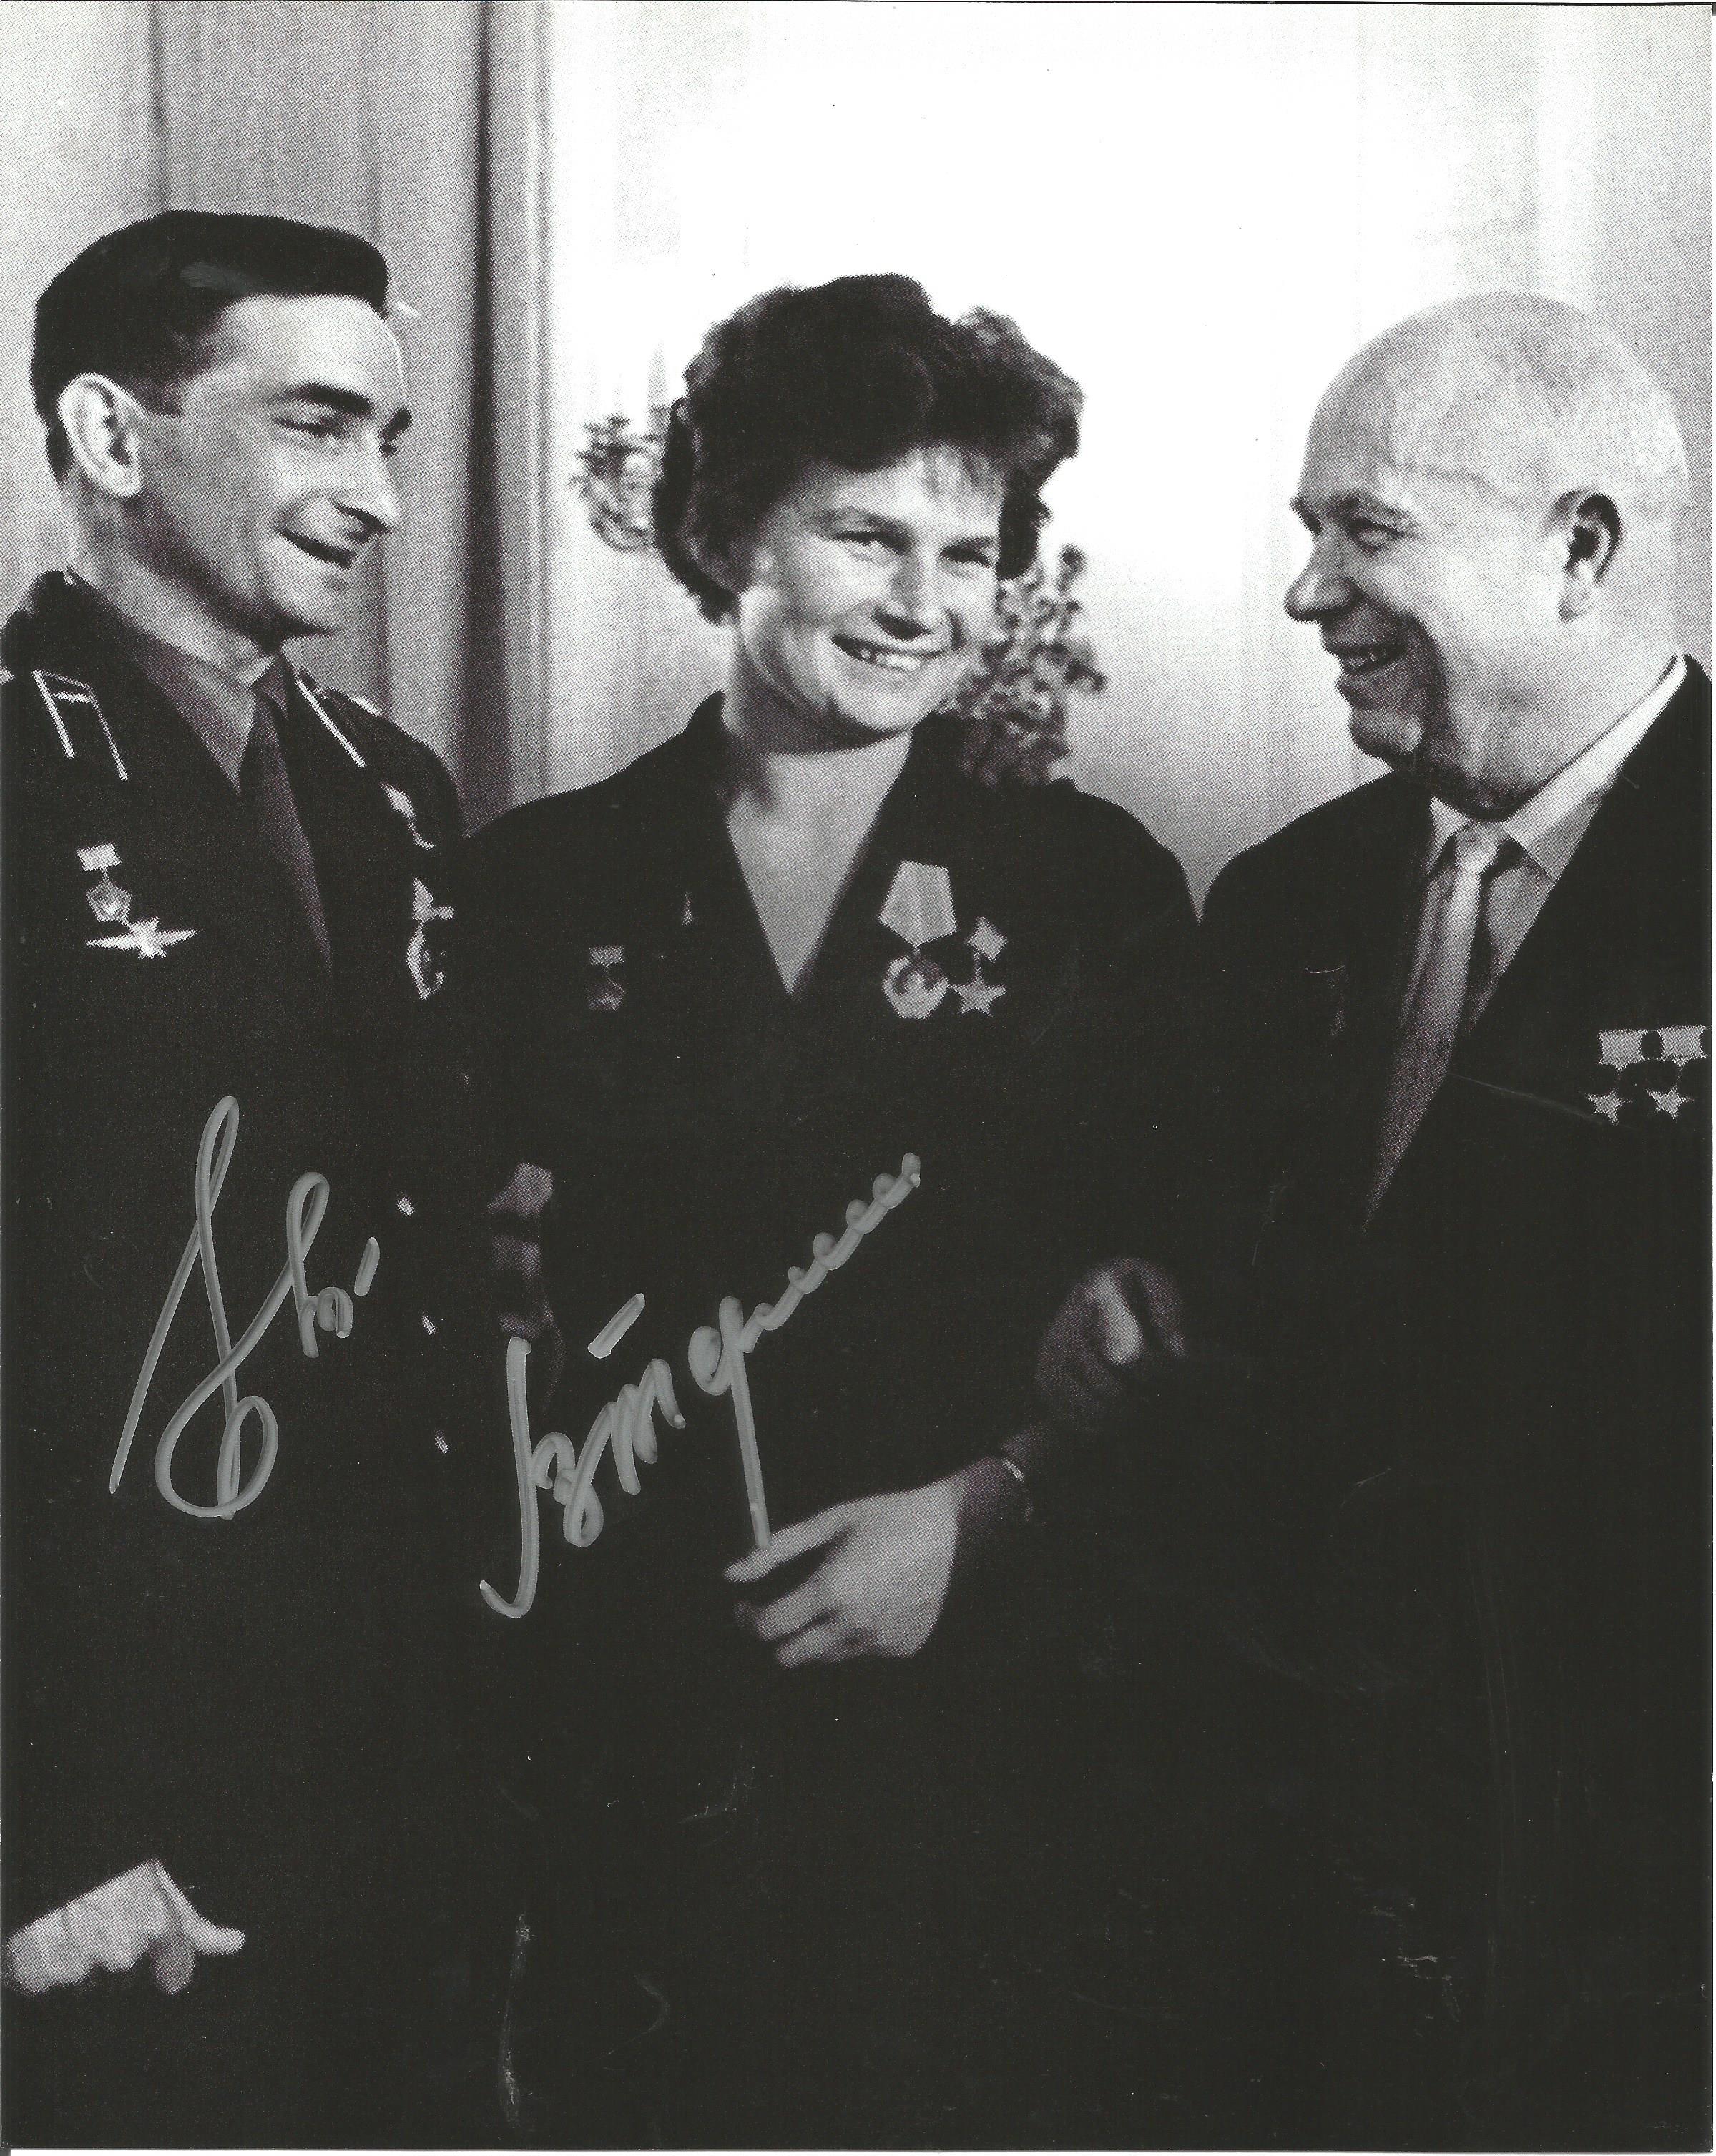 Cosmonauts Valentina Tereshkova and Valery Bykovsky genuine signed 10x8 b/w photo . Good